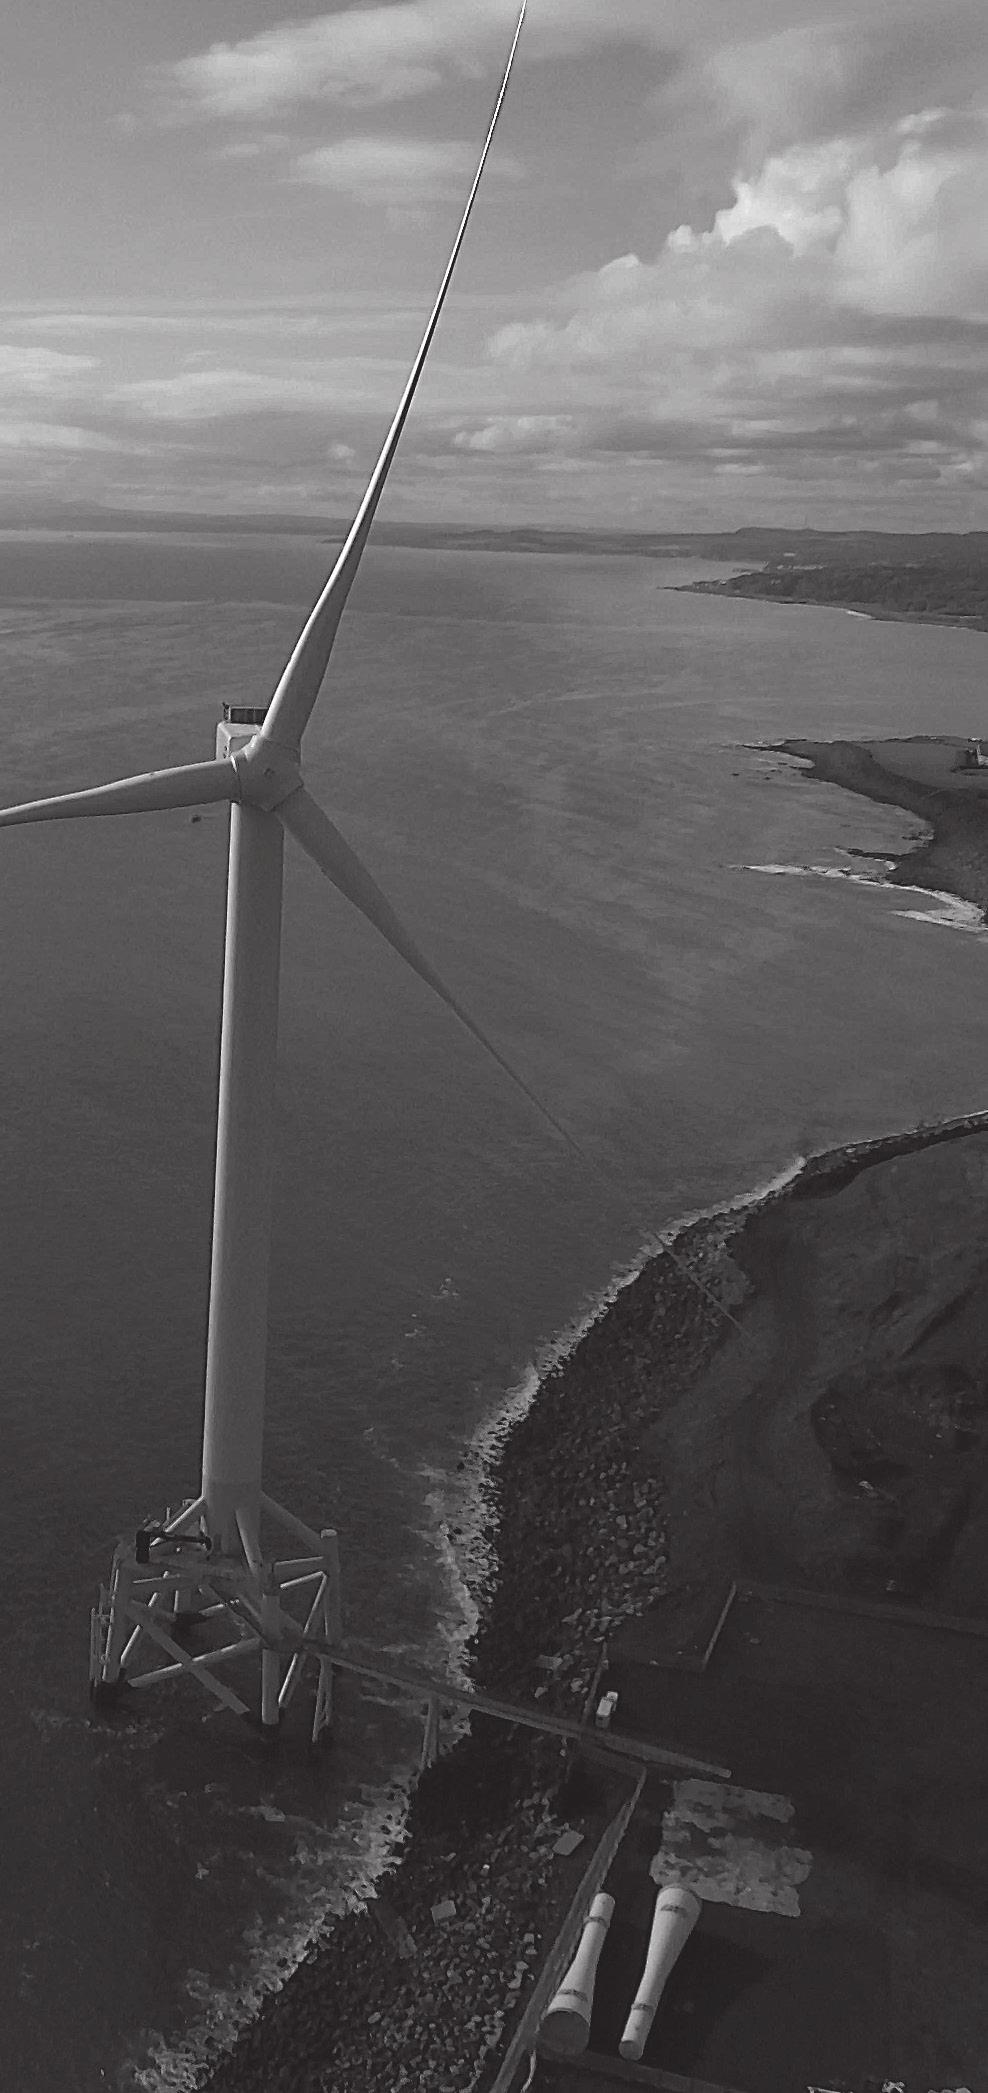 Levenmouth demonstration turbine 7MW open access offshore wind demonstration turbine.